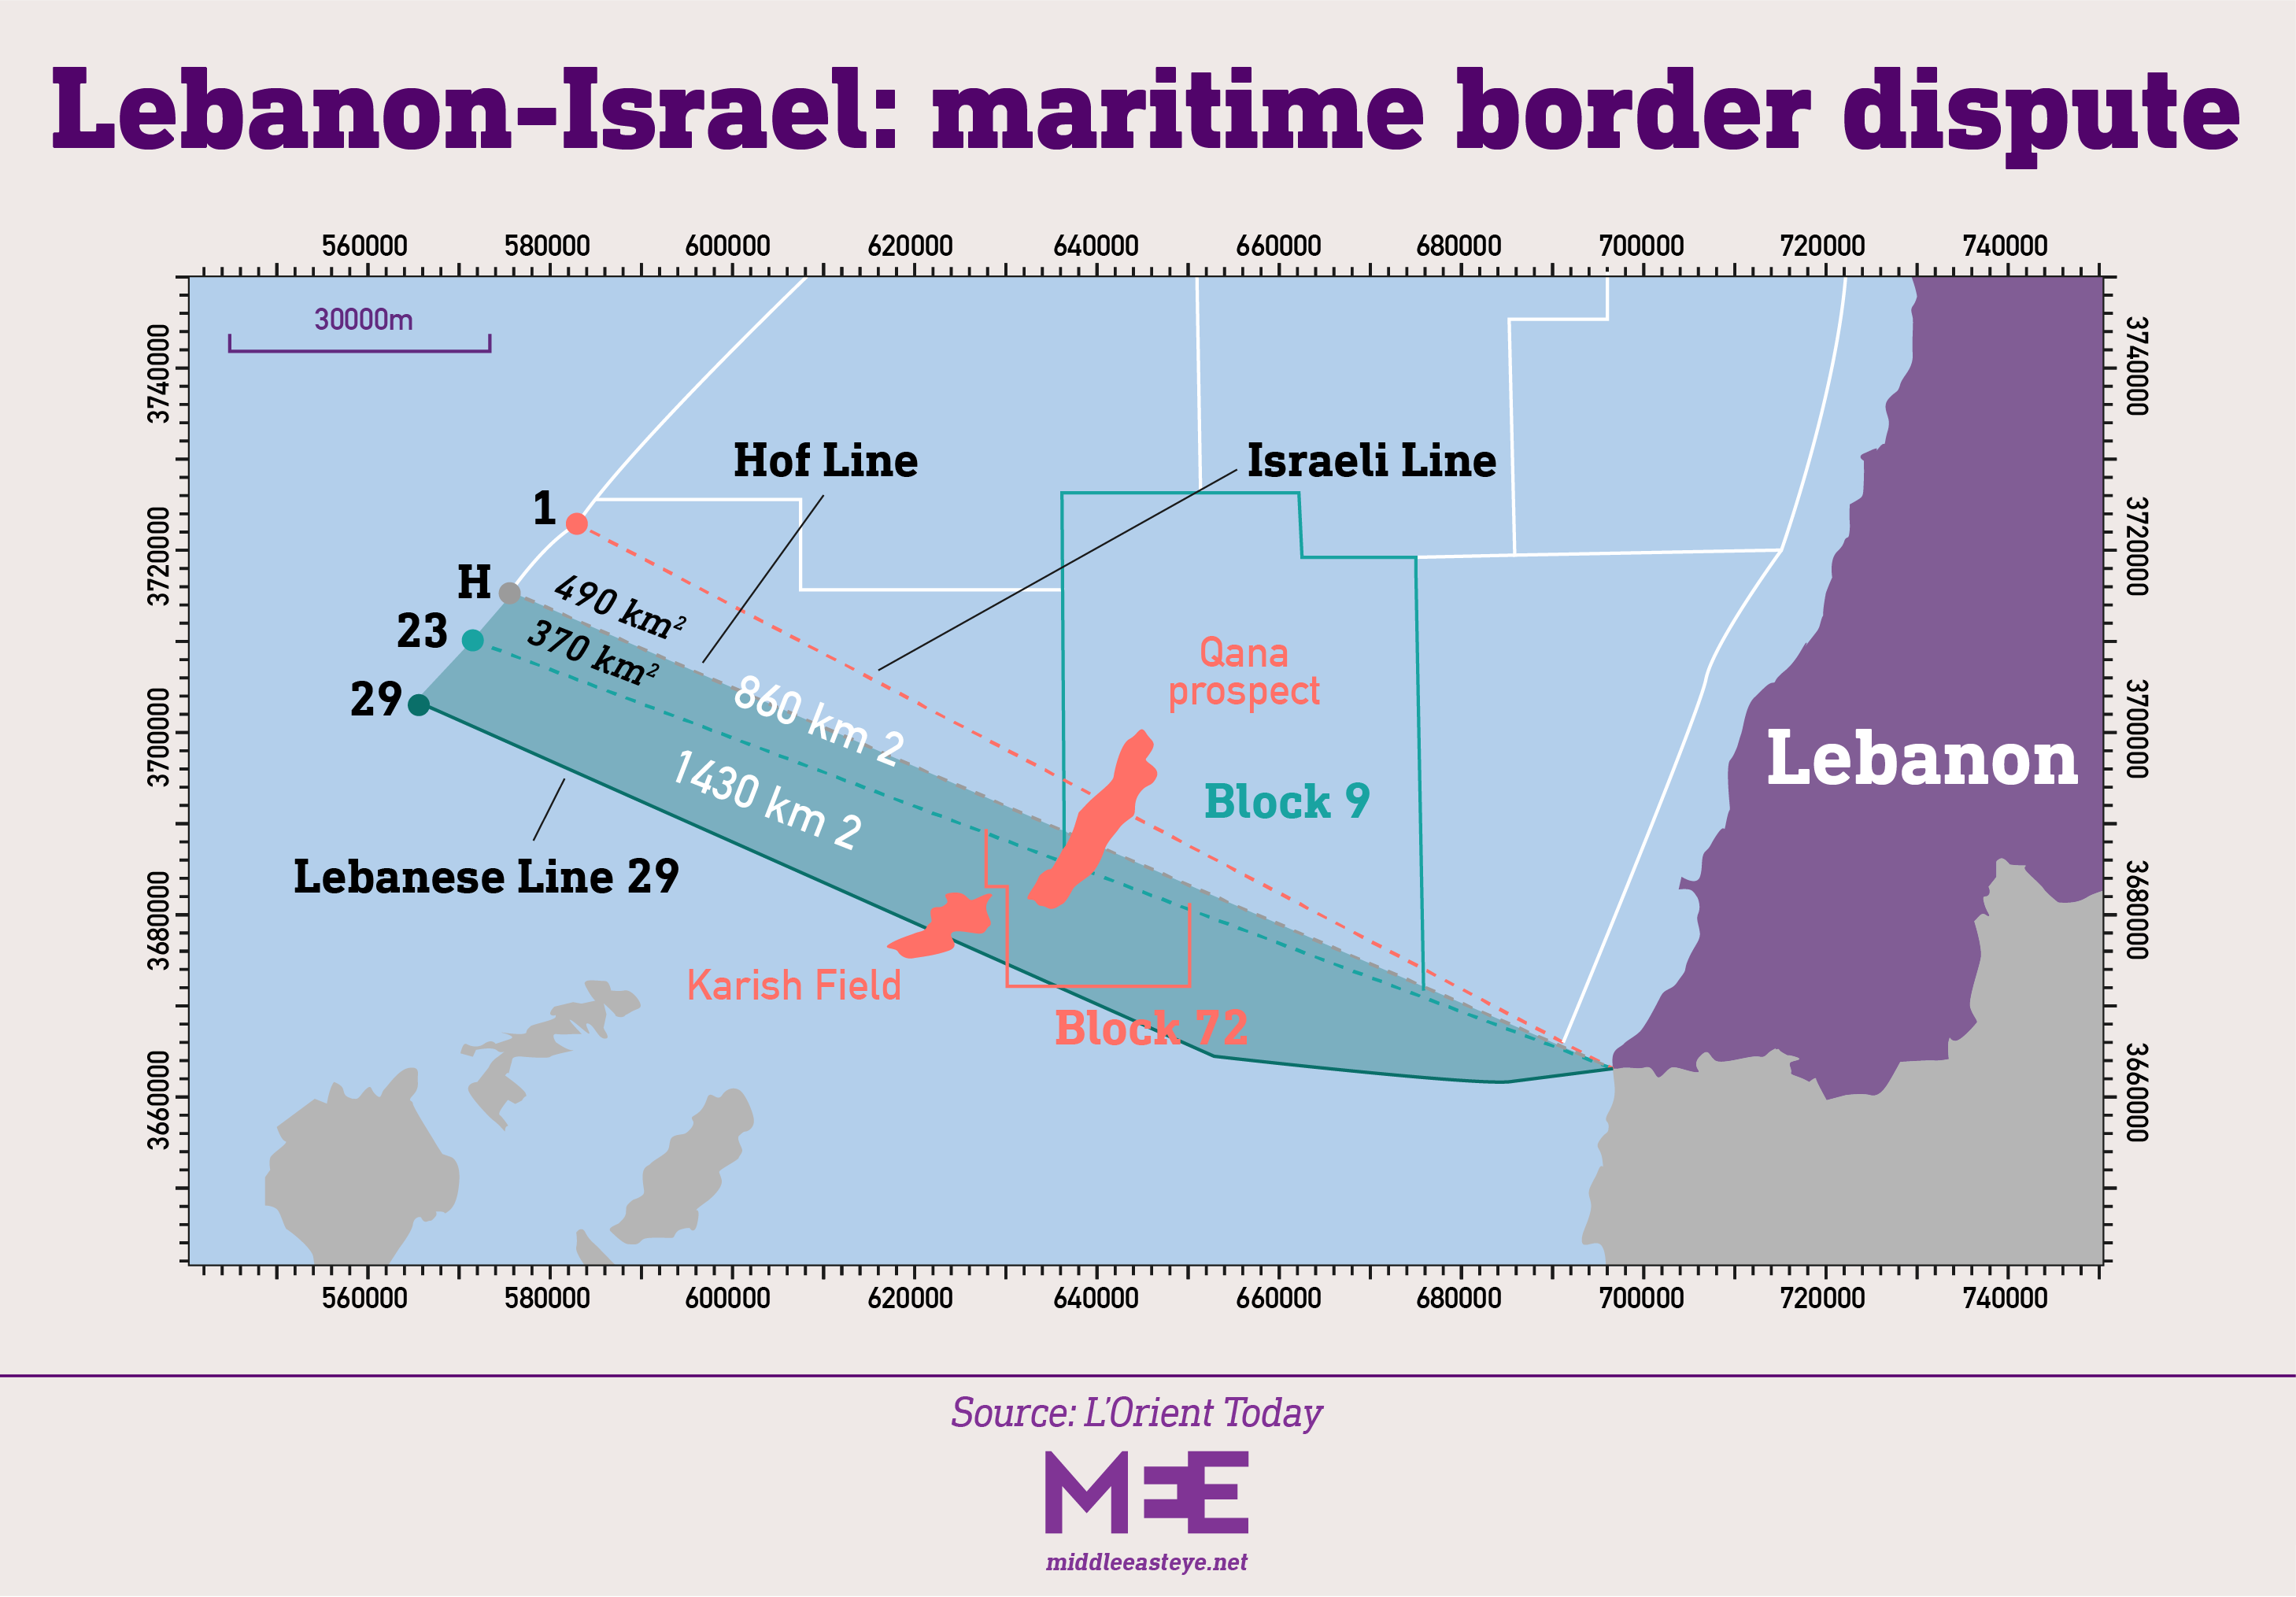 Explained: Renewed Israel-Lebanon maritime border dispute | Middle East Eye